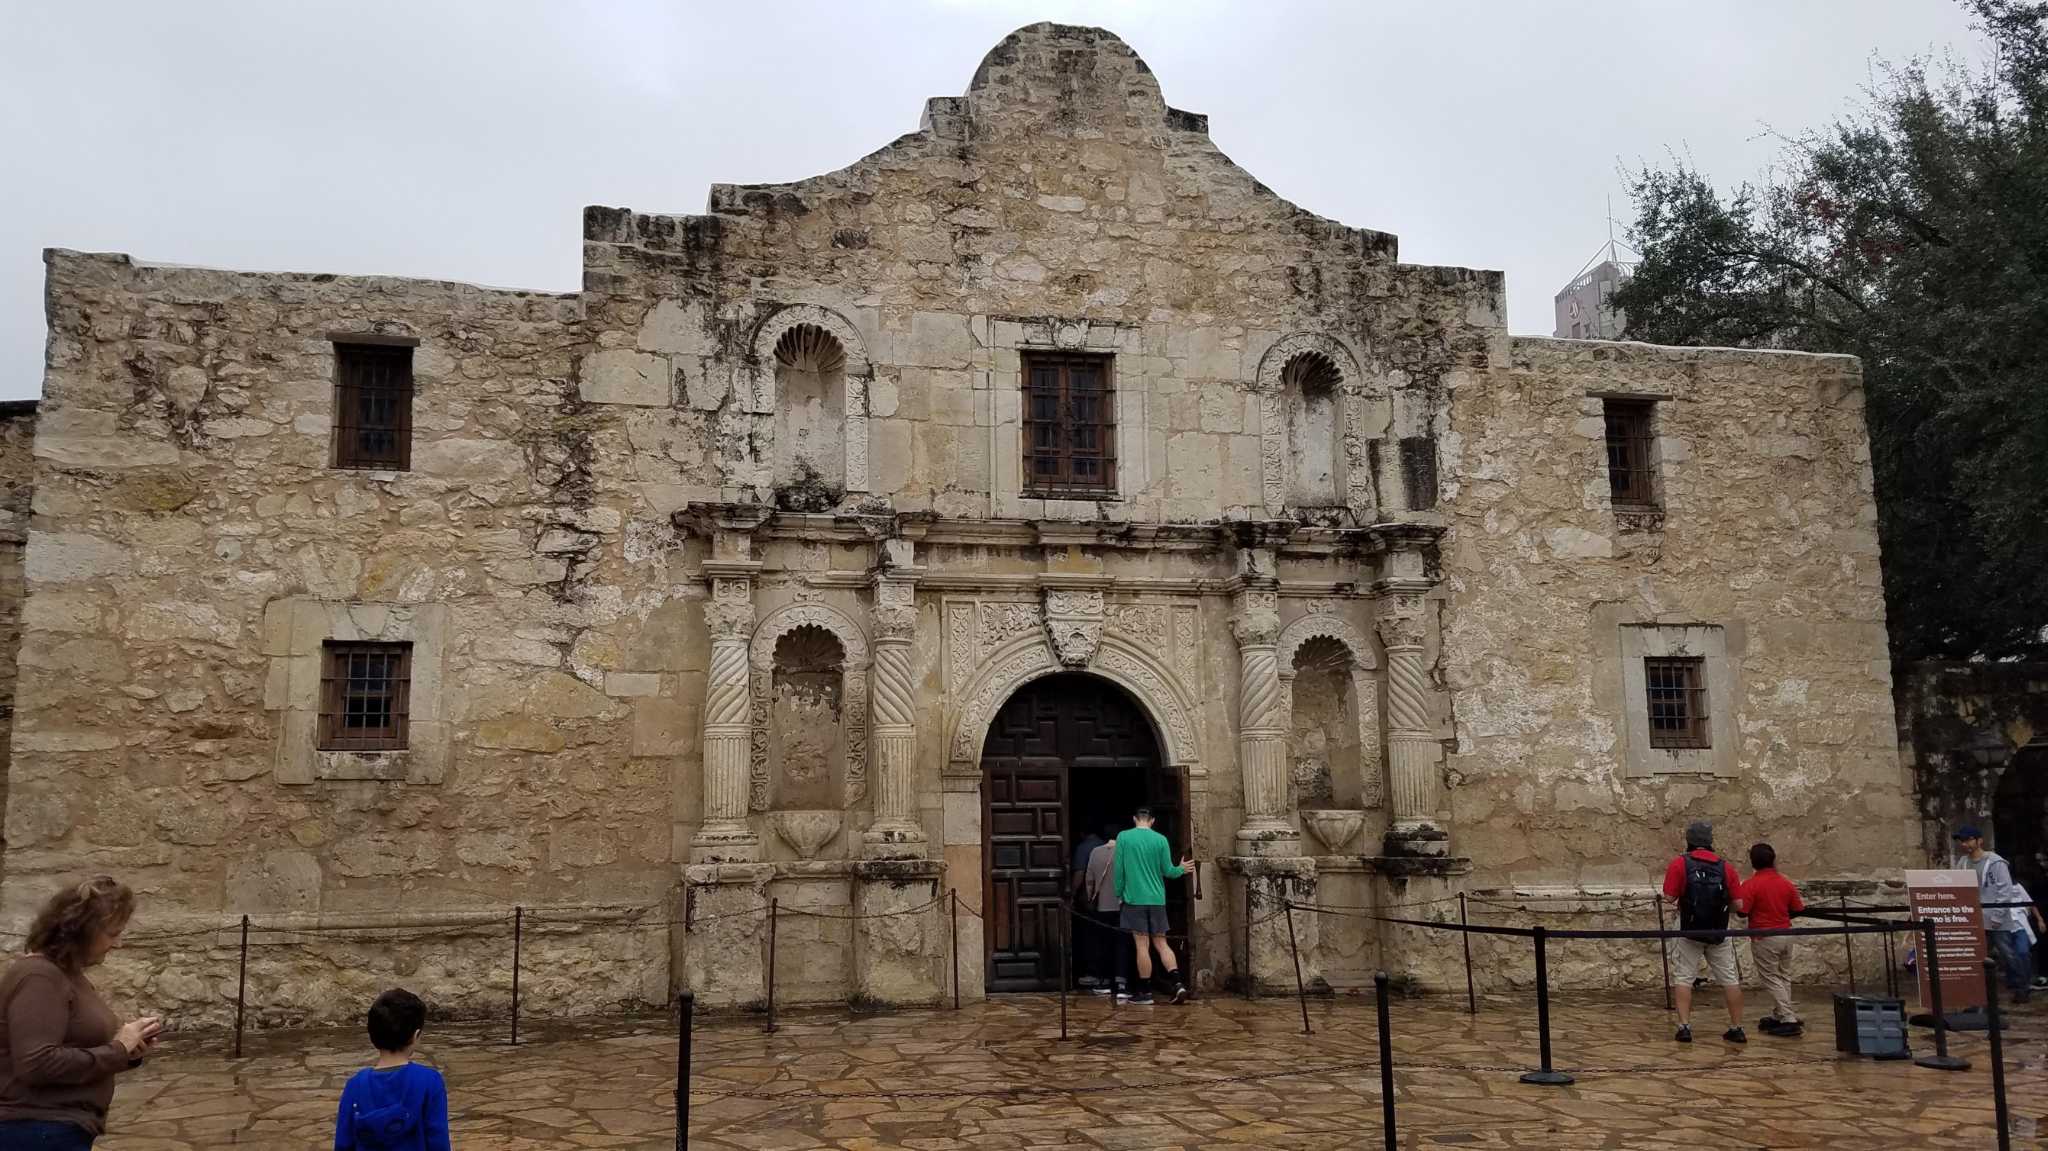 No, Texas has no plans for Santa Anna statue at Alamo - Houston Chronicle